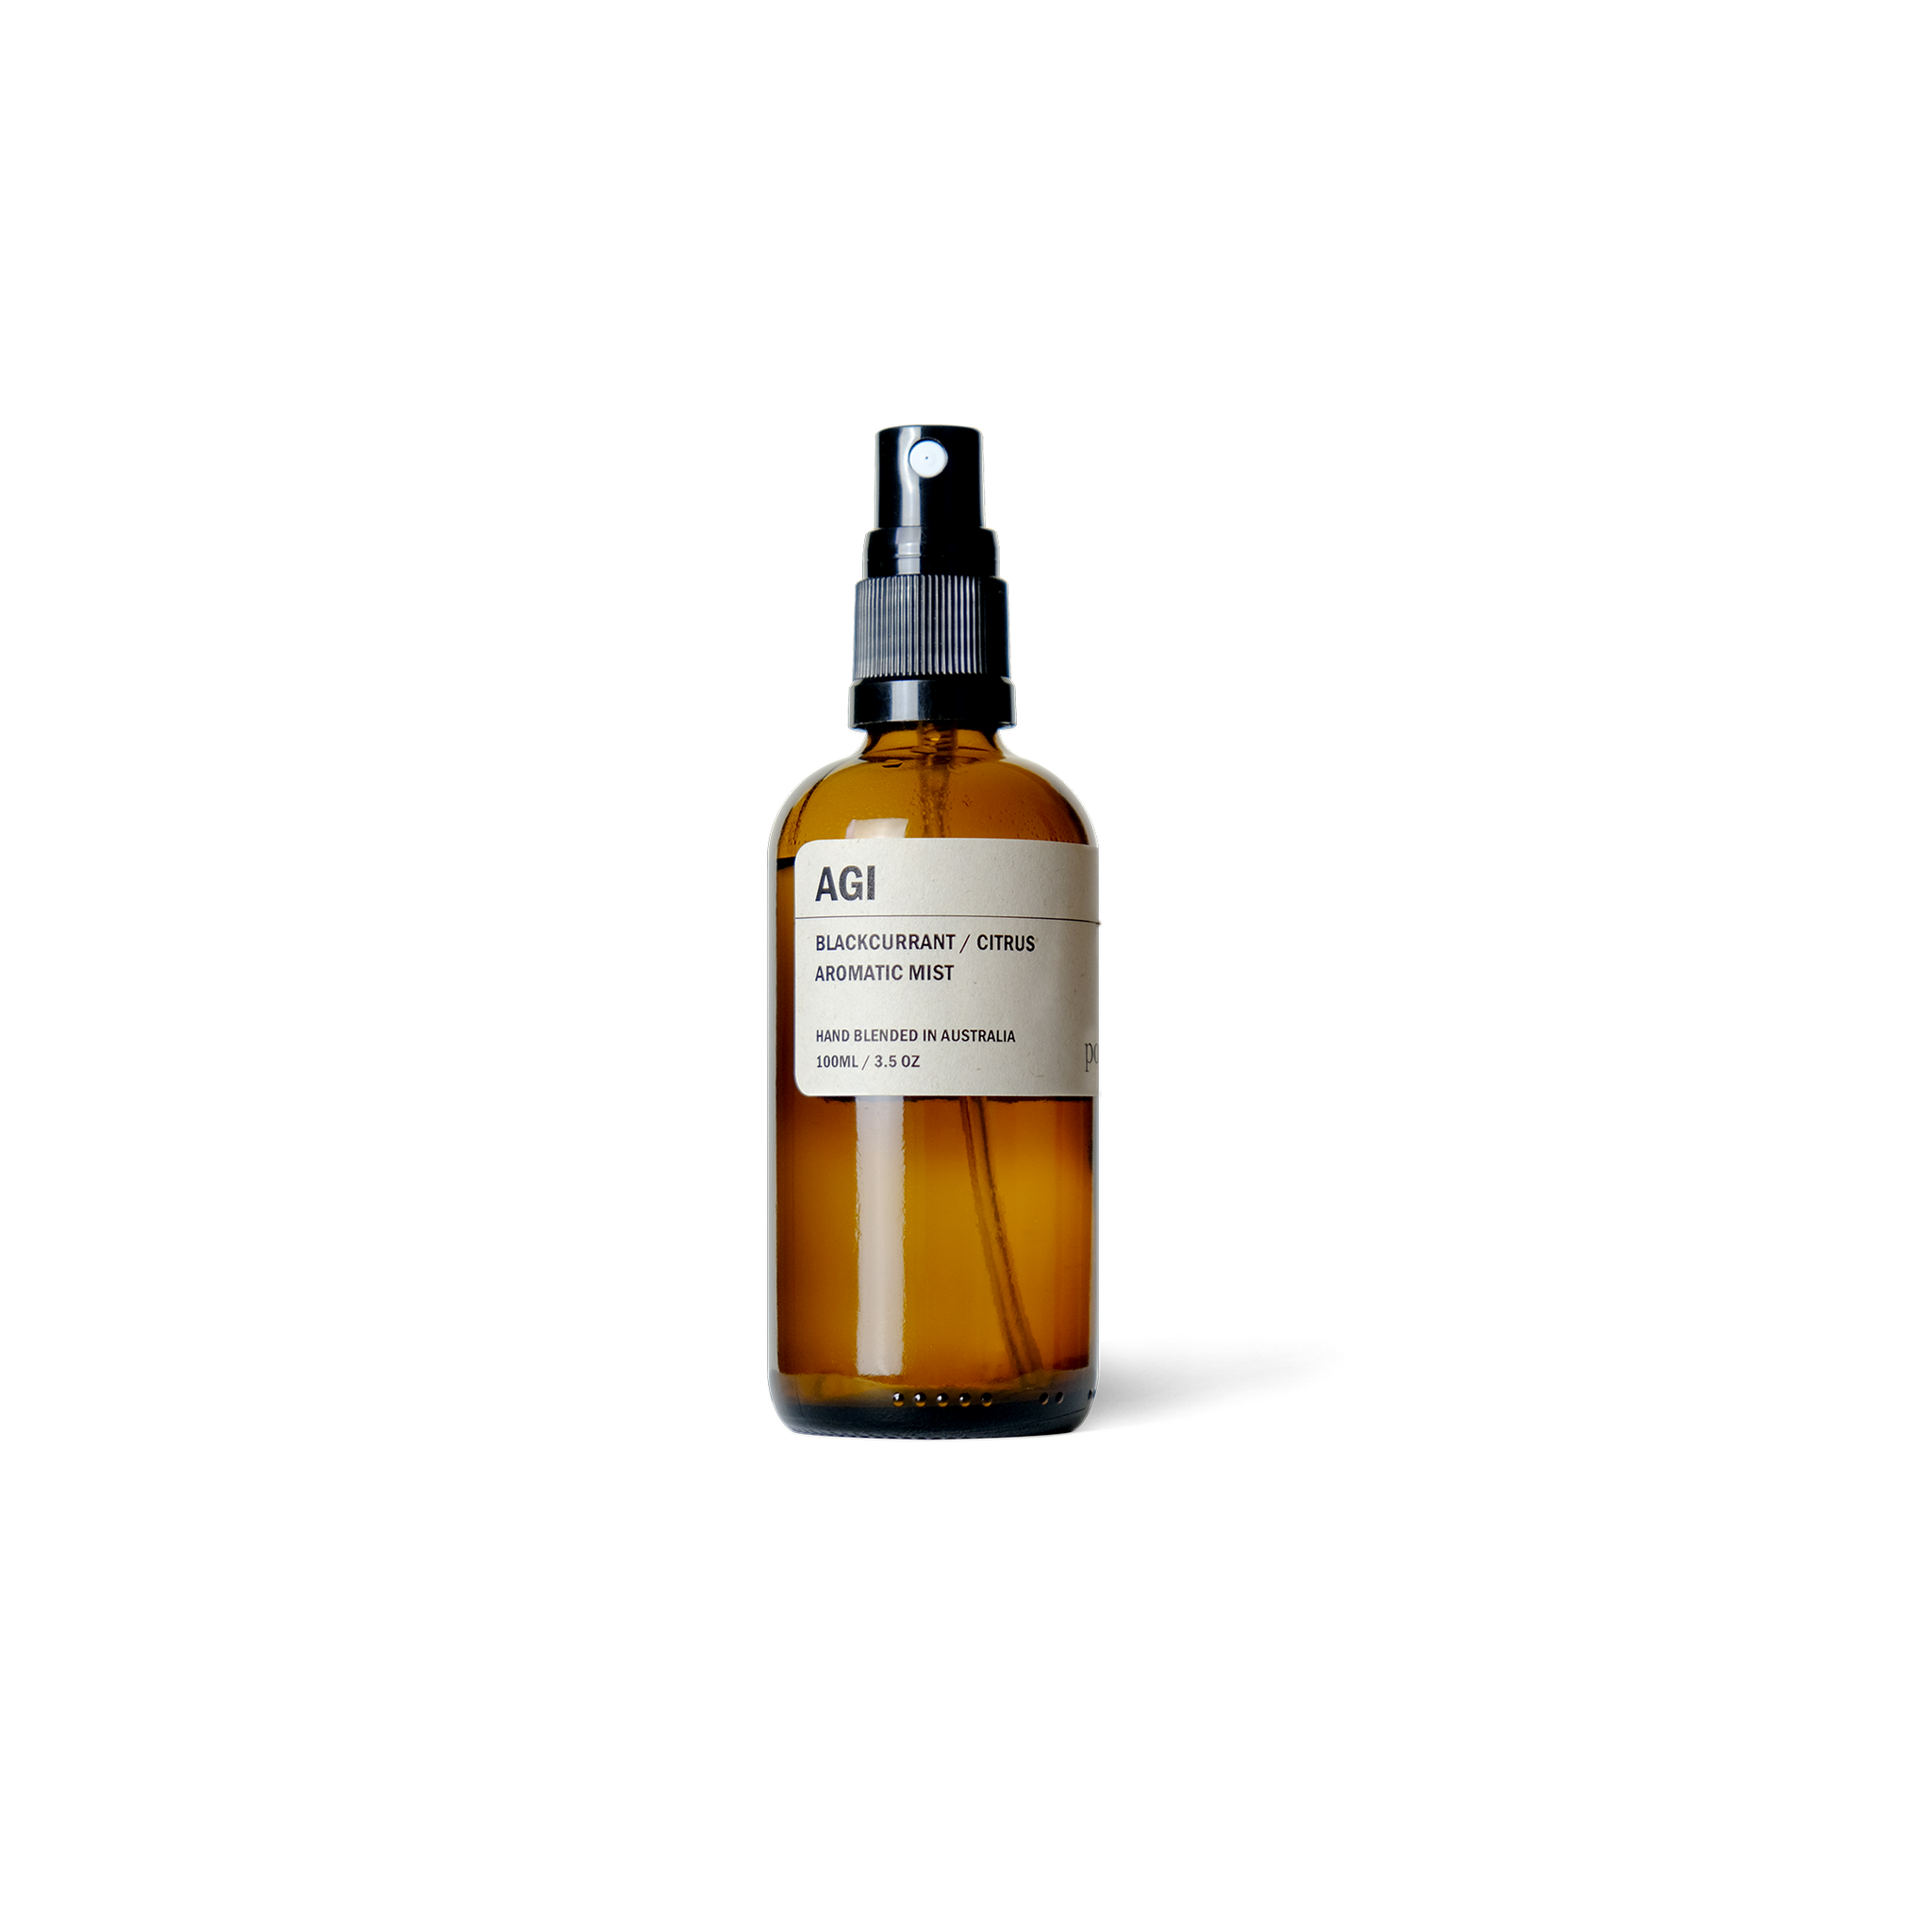 AGI: Blackcurrant / Citrus / Leather Aromatic Room Spray